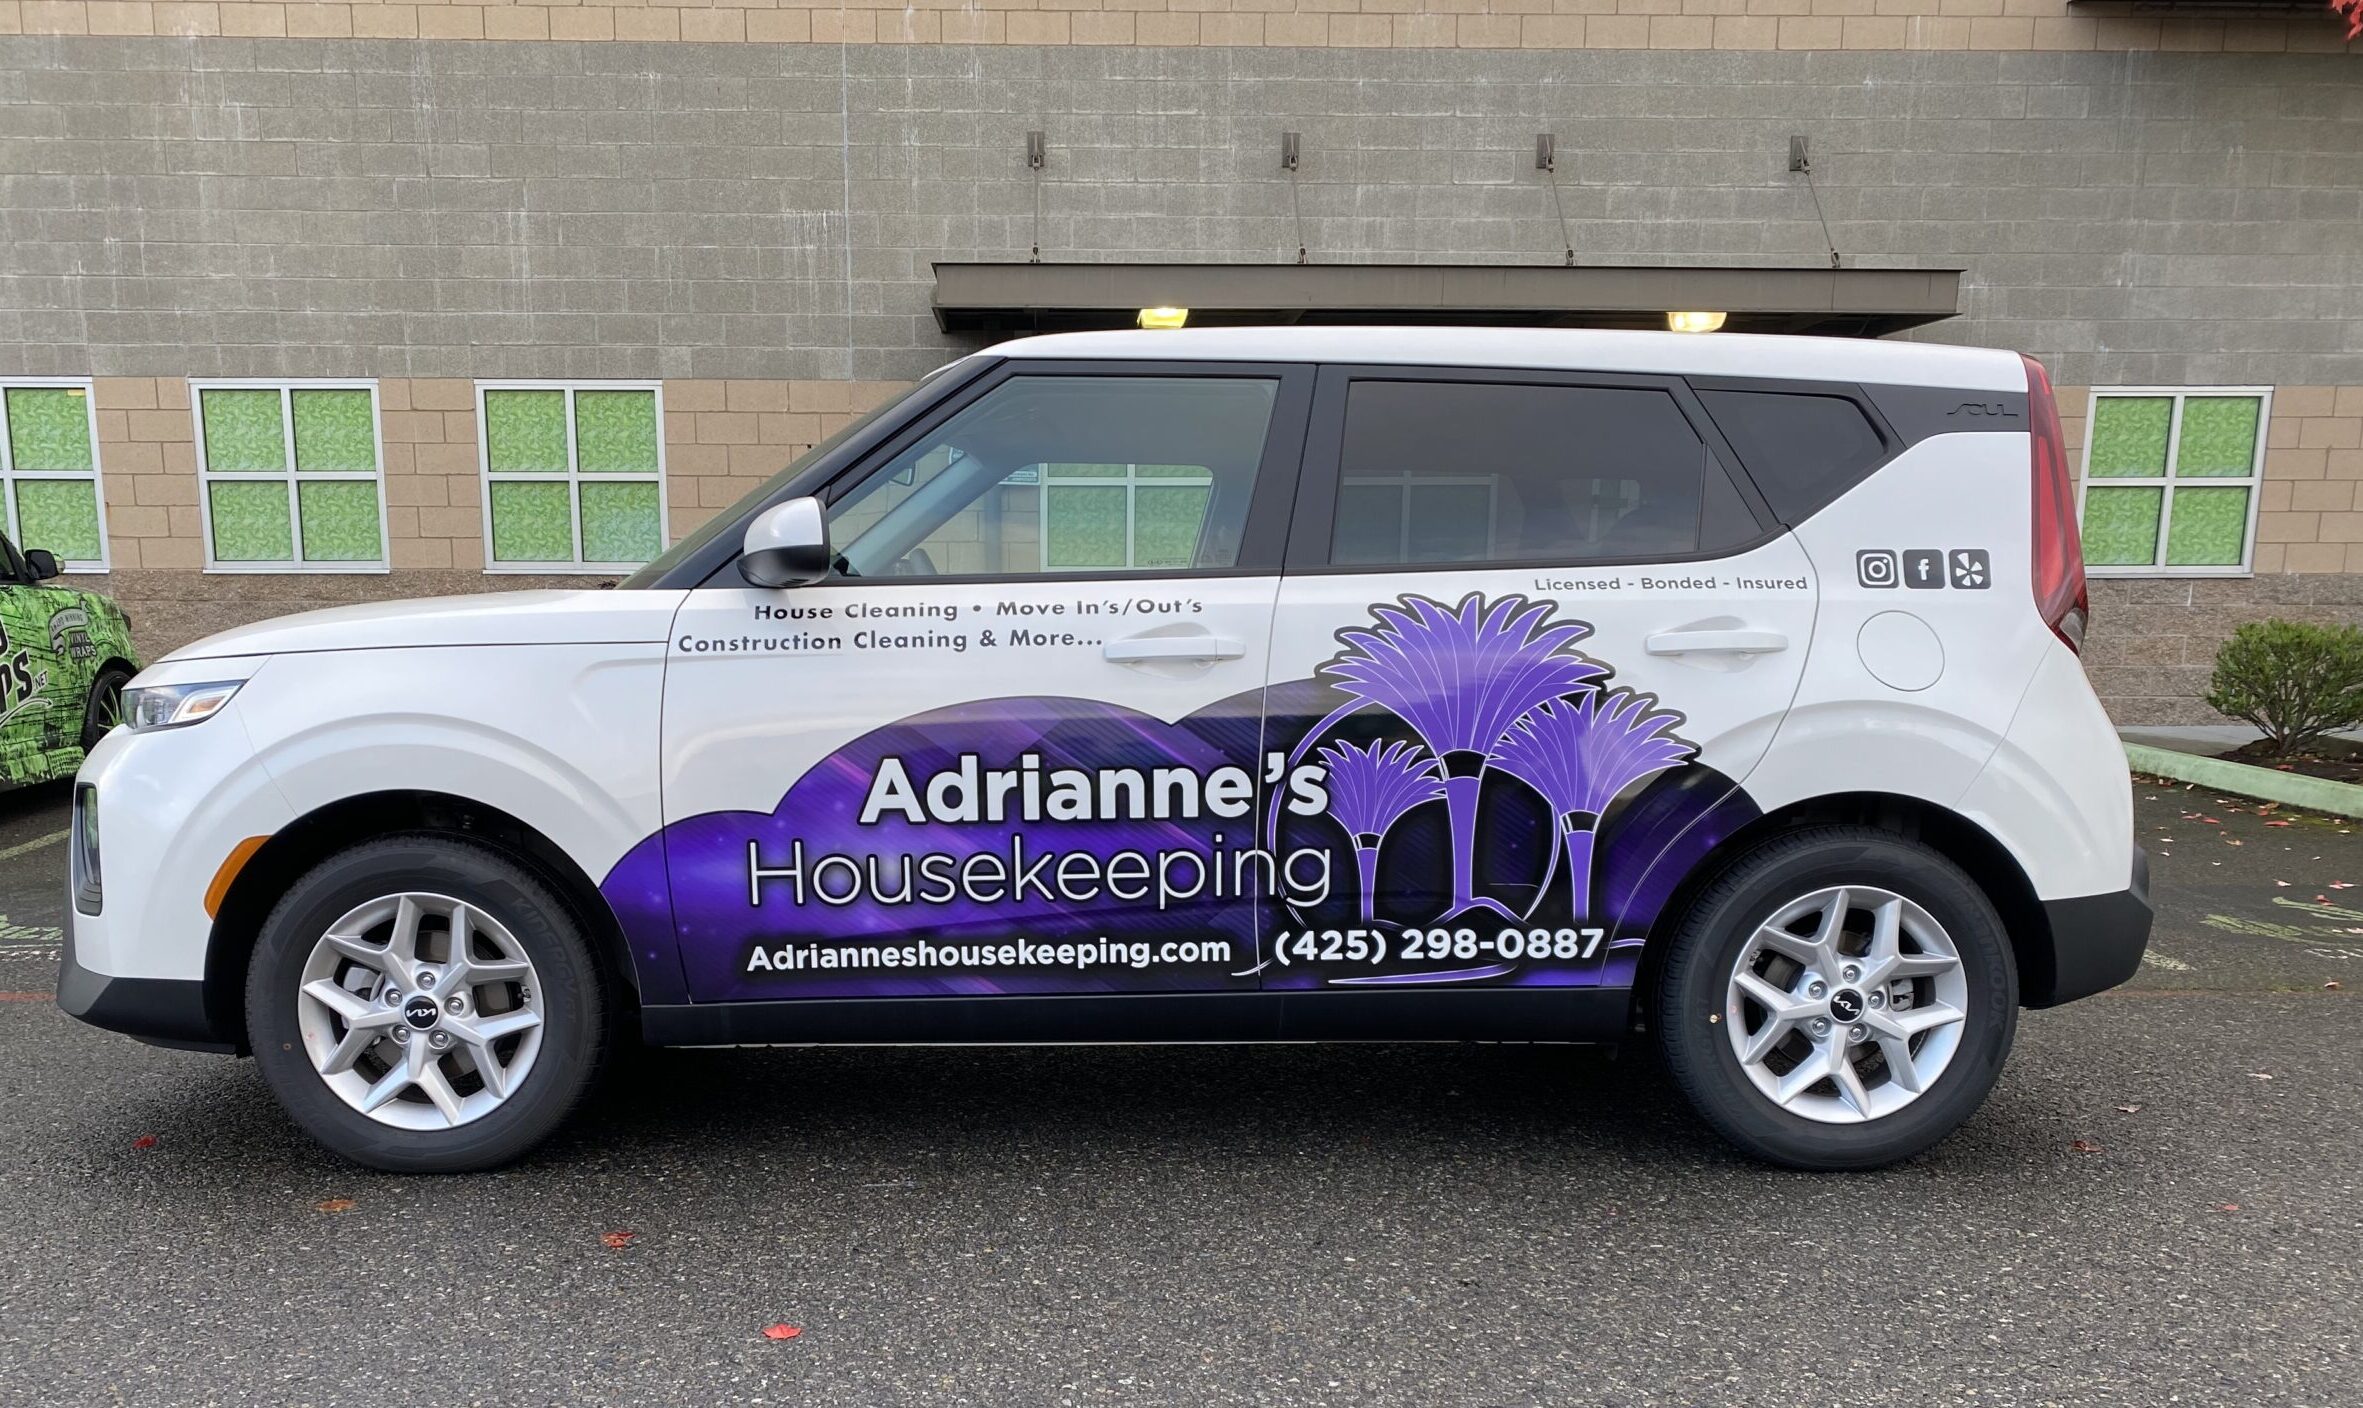 Adrianne's Housekeeping Auto Wrap